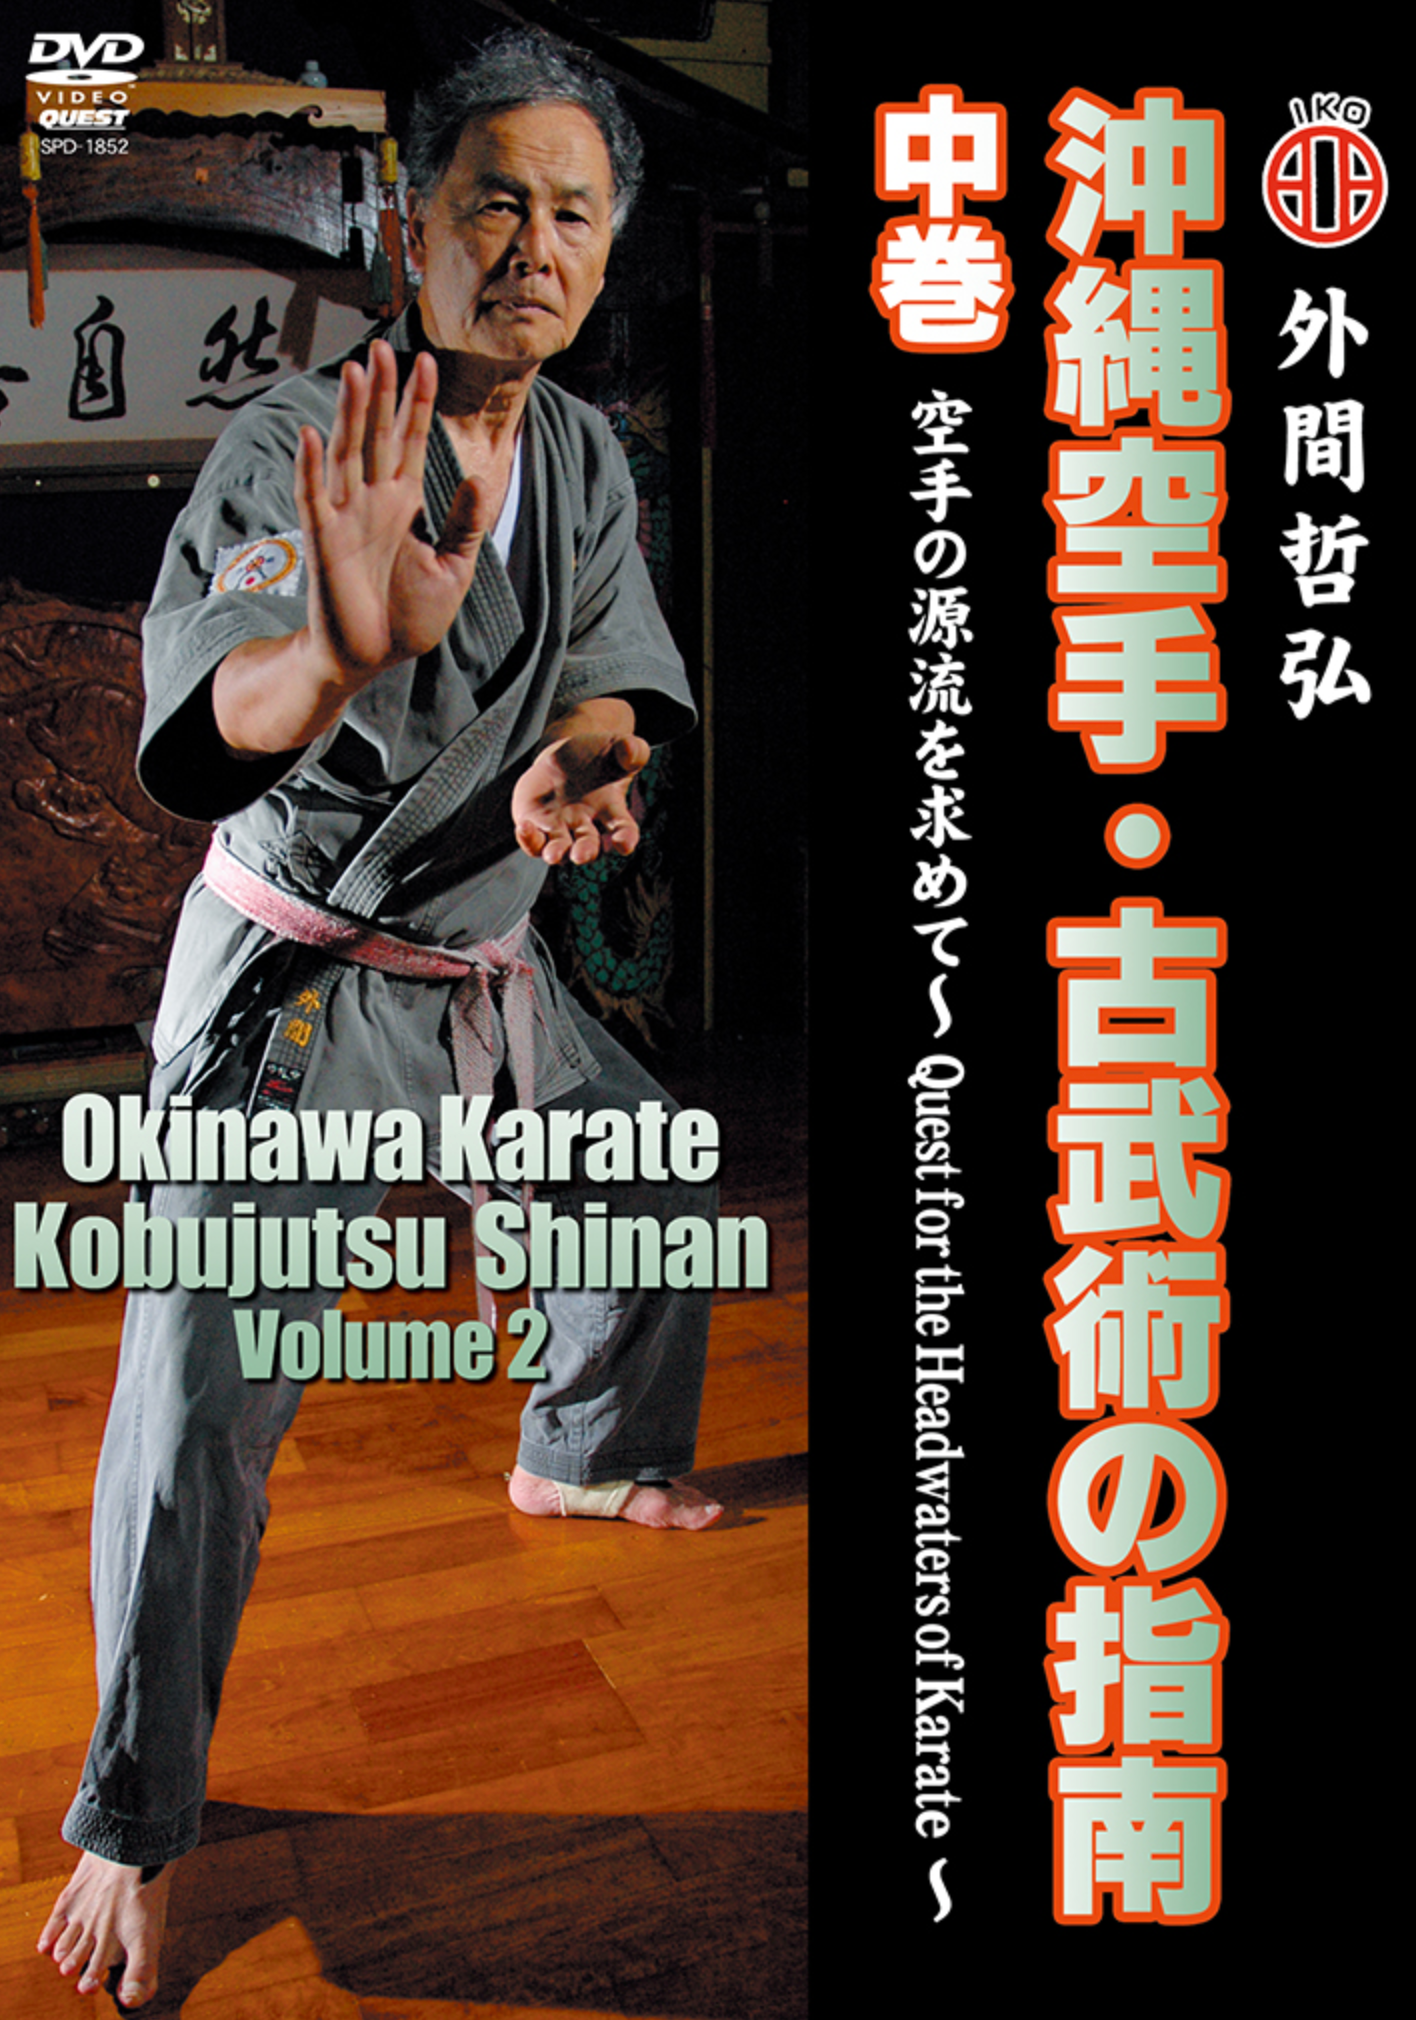 Okinawa Karate Kobujutsu Shinan Vol 2 DVD with Tetsuhiro Hokama - Budovideos Inc